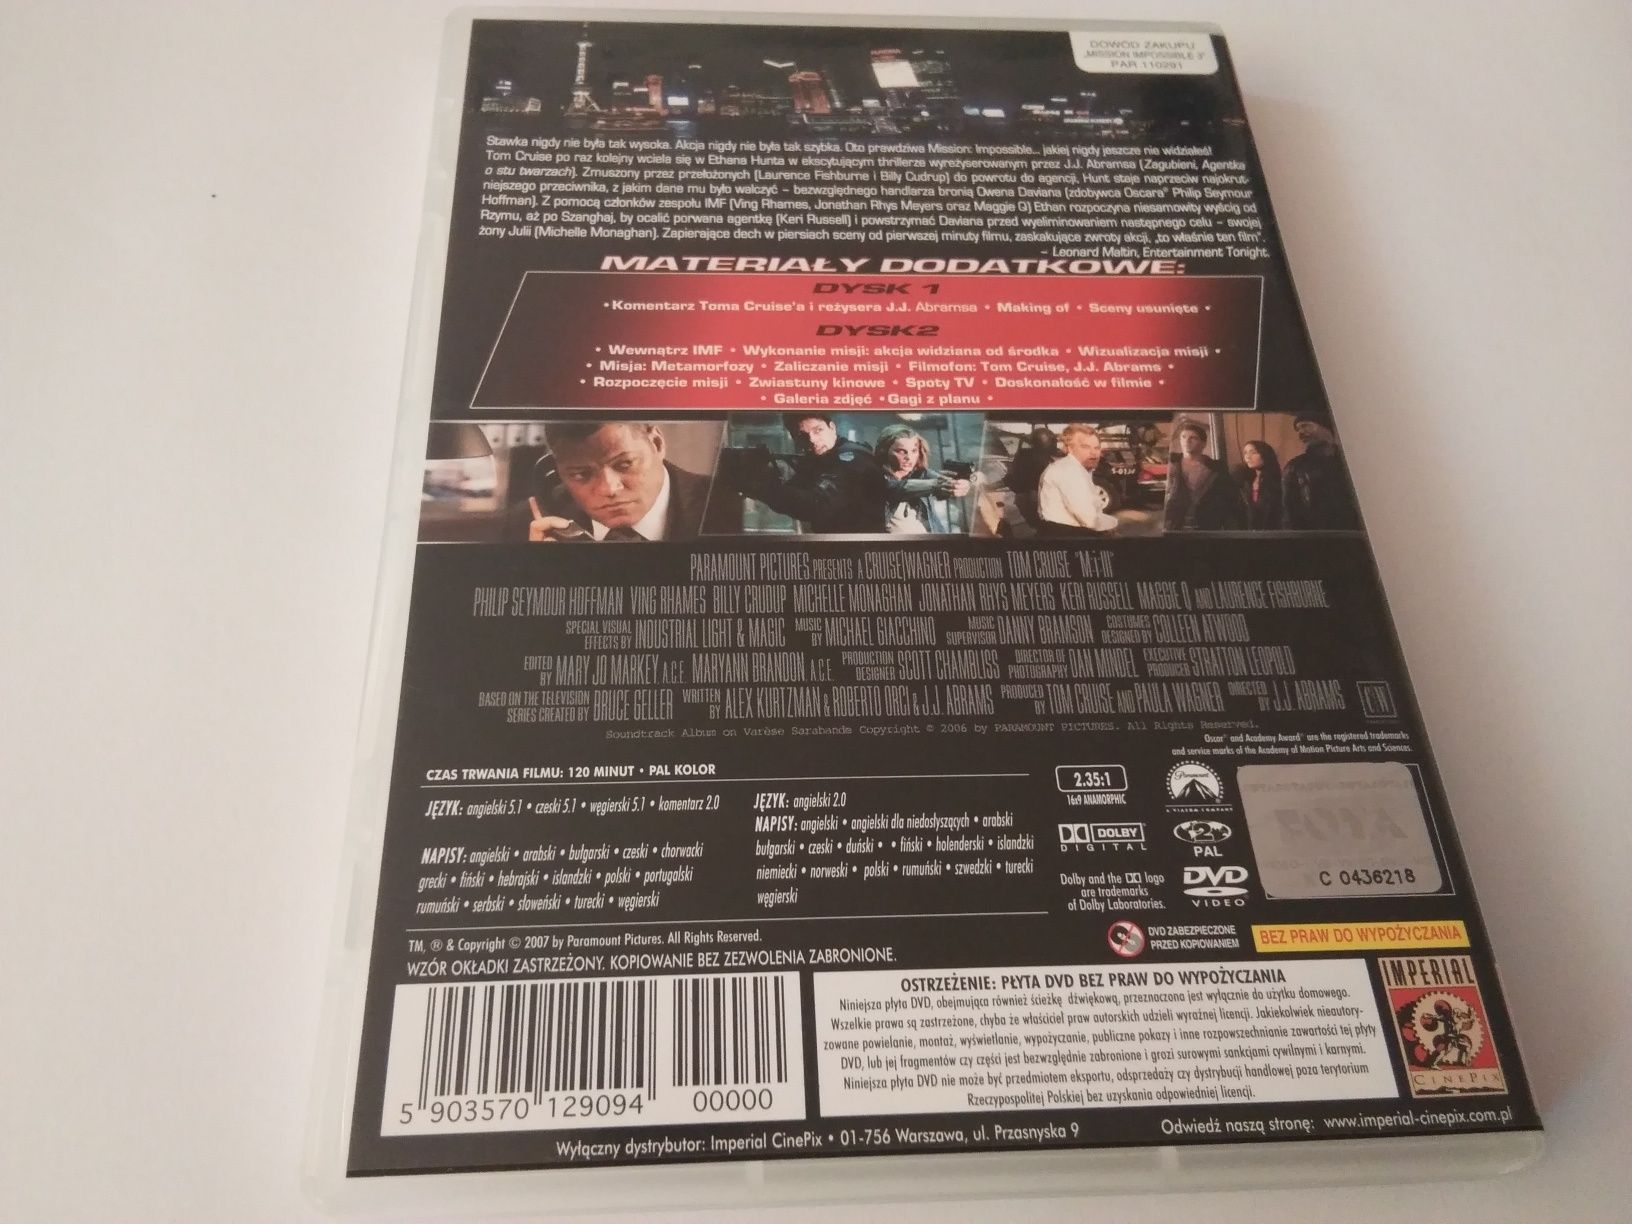 Sprzedam film DVD Mission Impossible III.